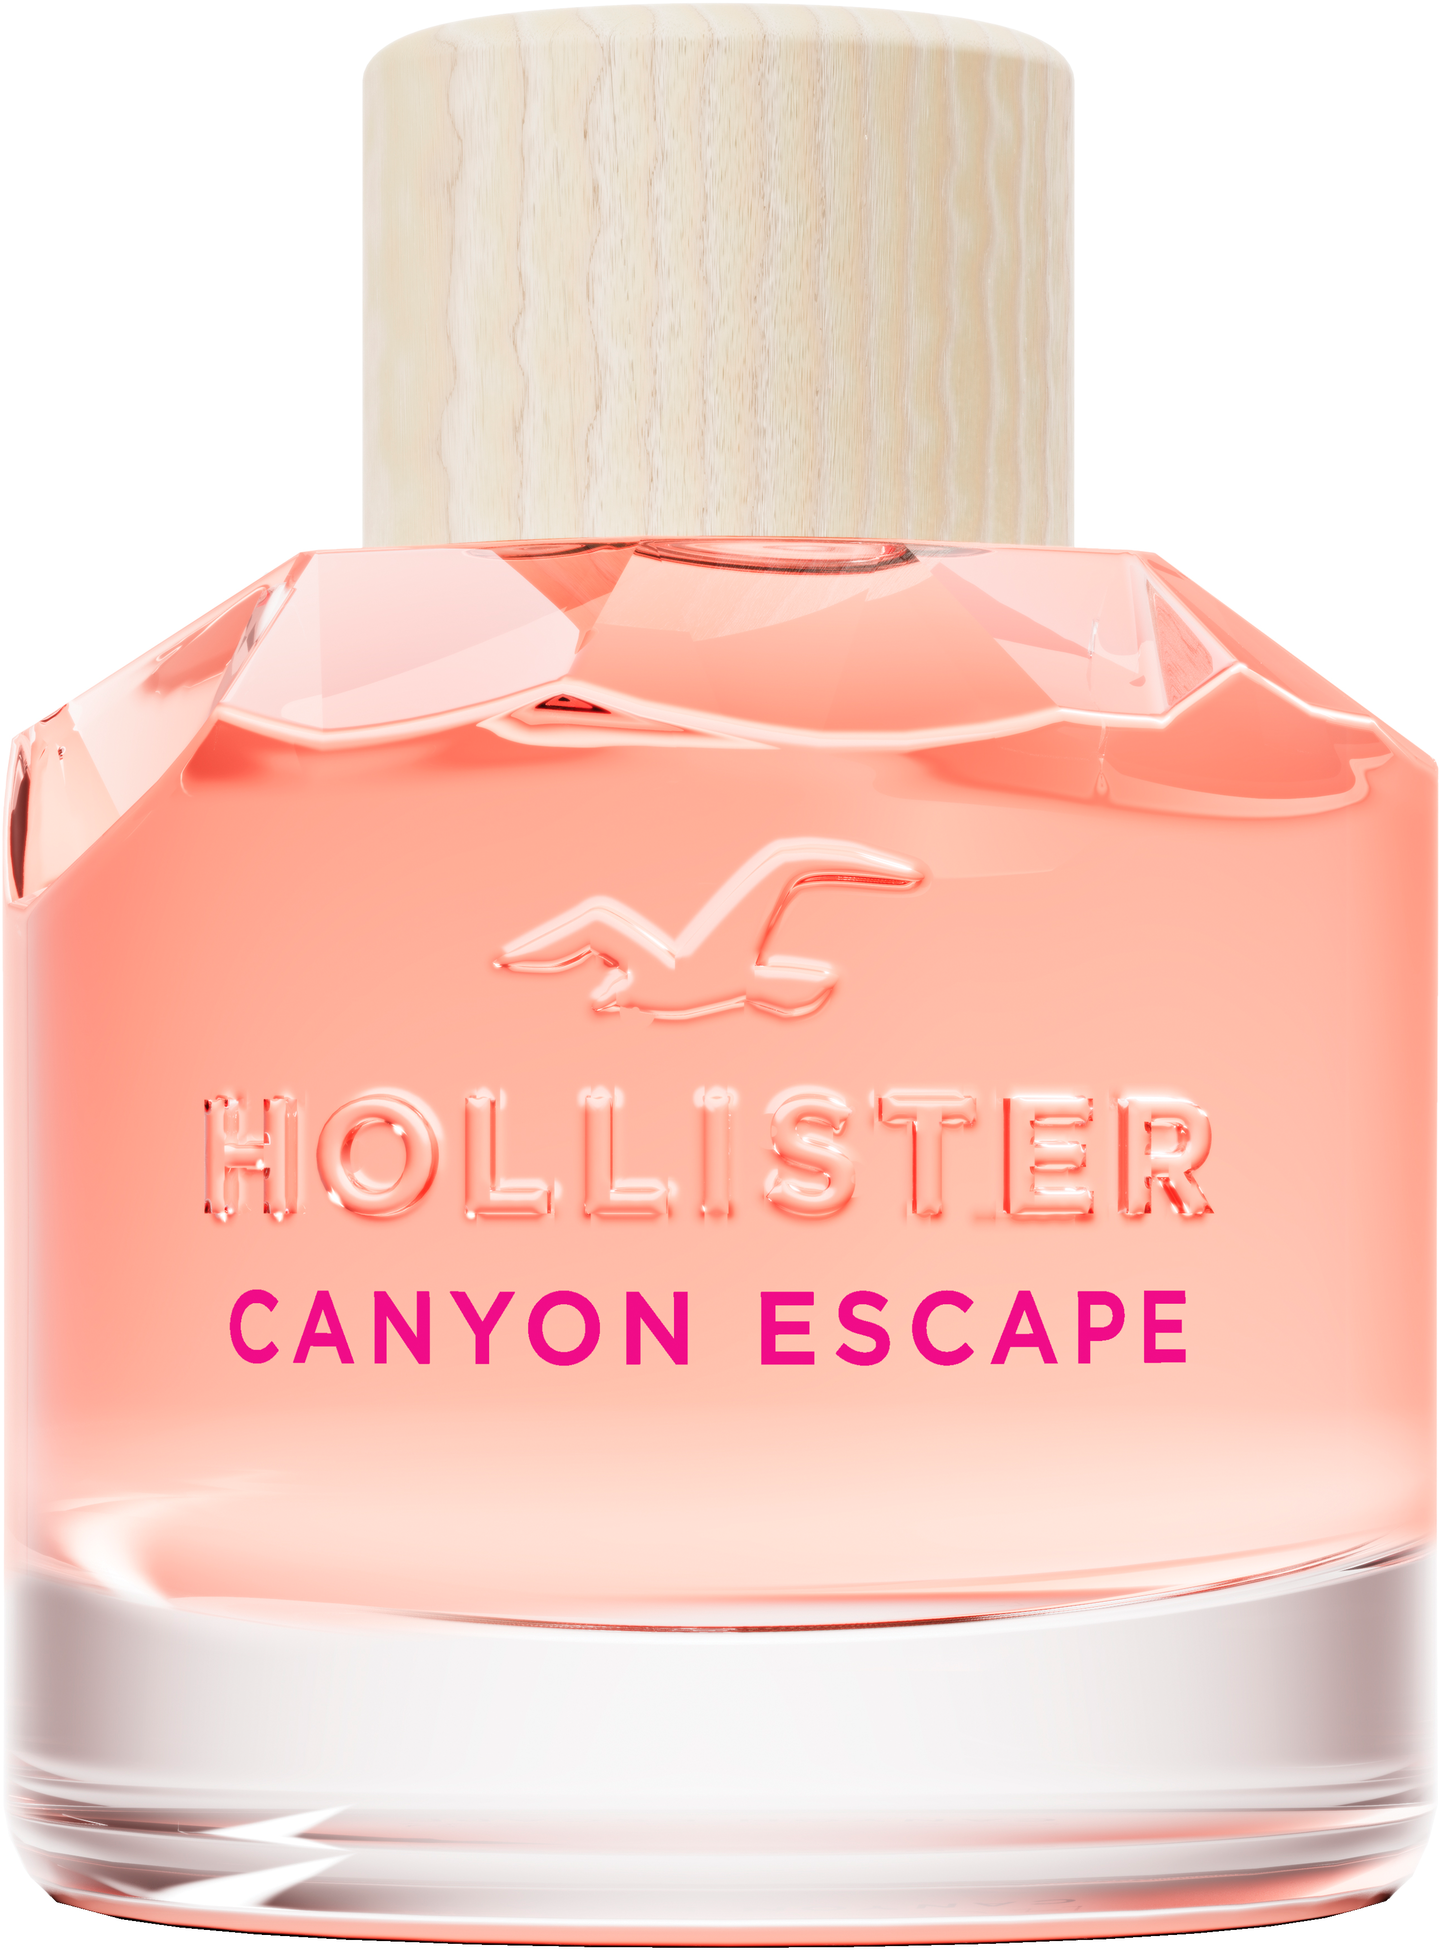 Hollister canyon escape. Hollister духи Canyon. Духи Hollister Canyon Escape. Духи Hollister Canyon Rush. Hollister Canyon Escape woman EDP 50 ml.